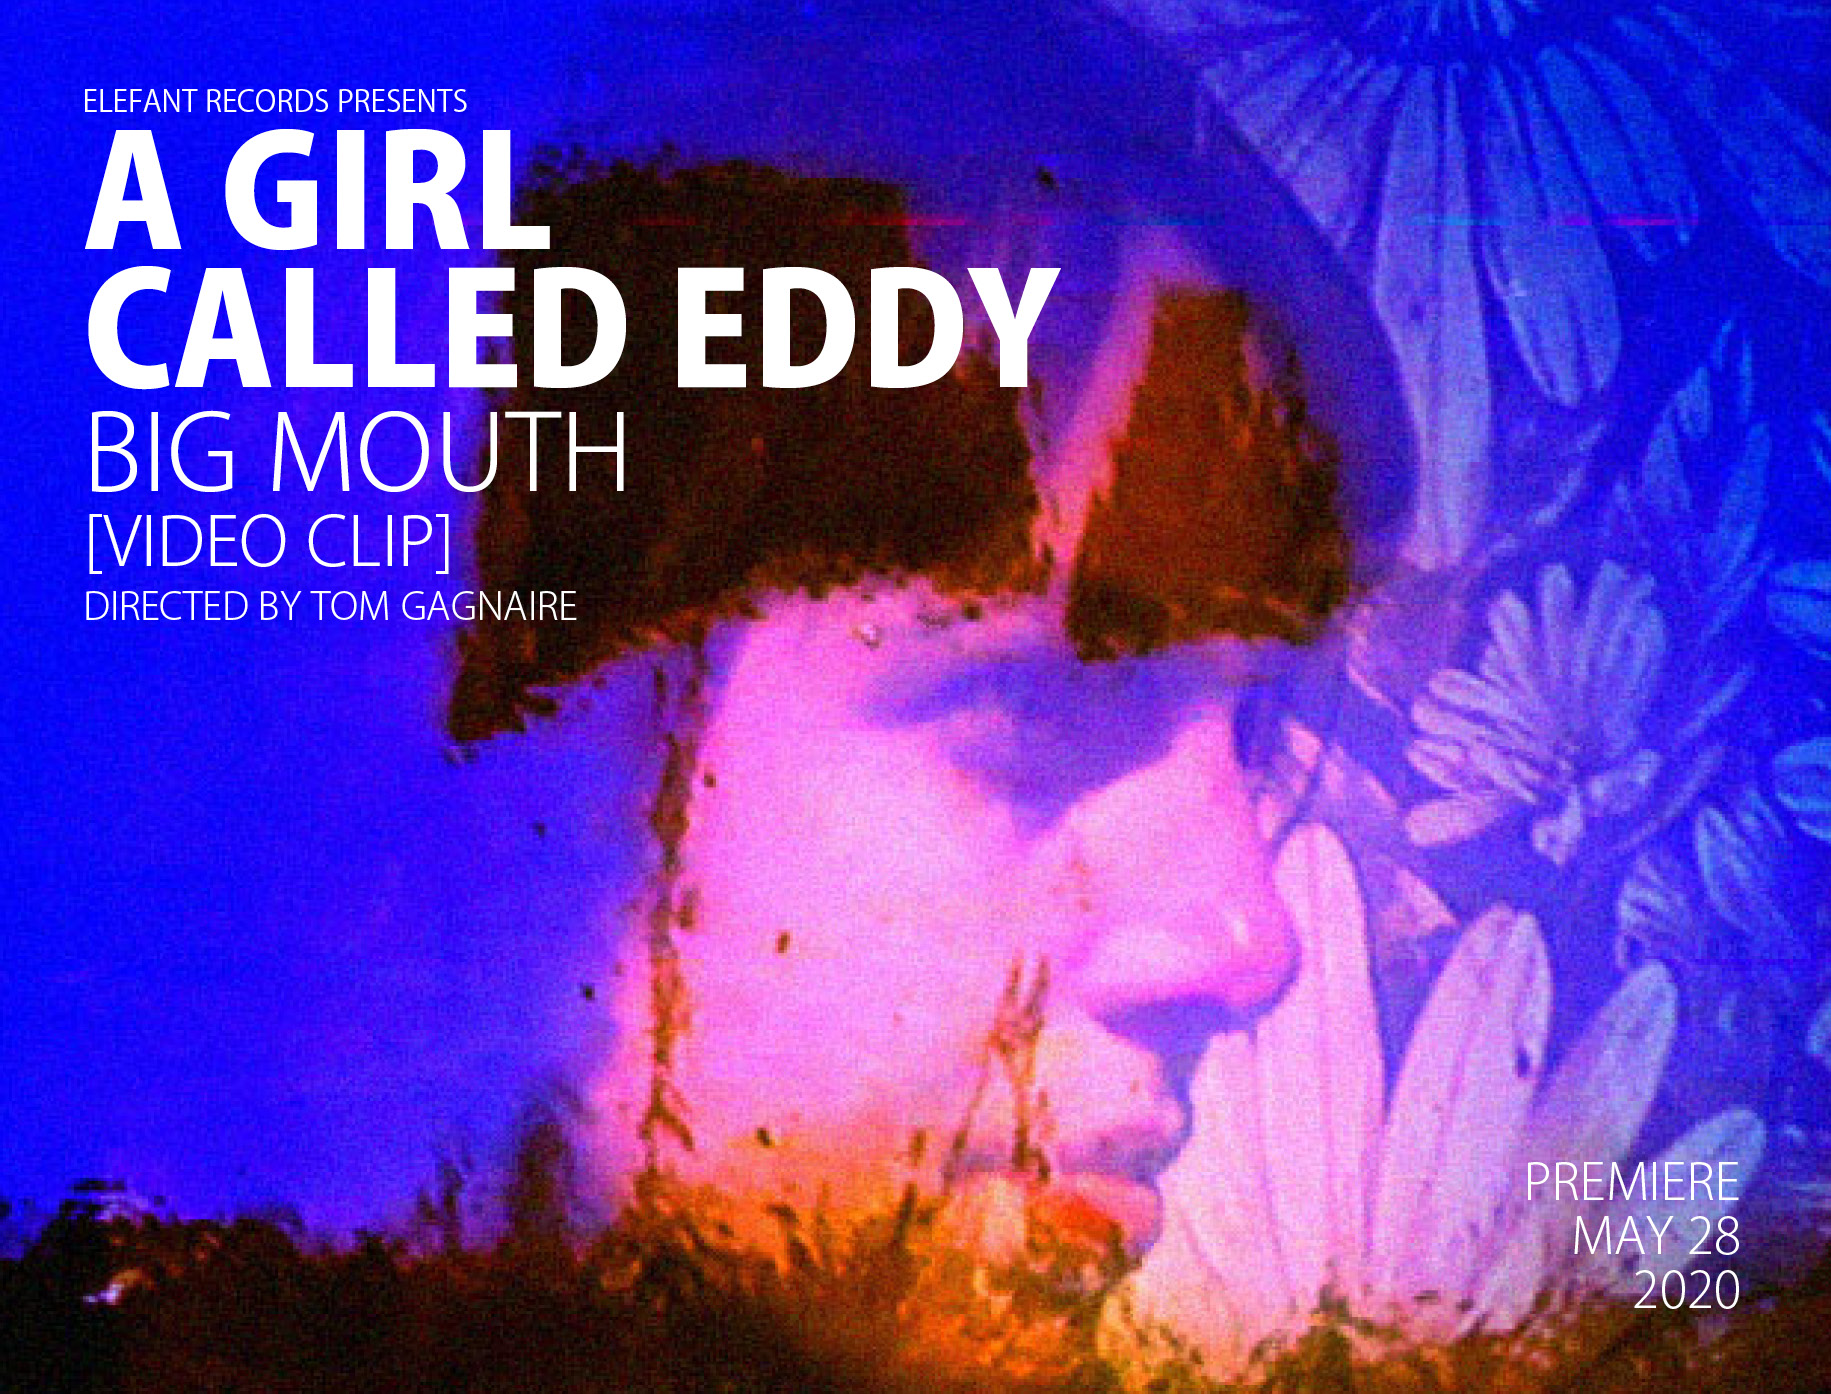 A Girl Called Eddy "Big Mouth"